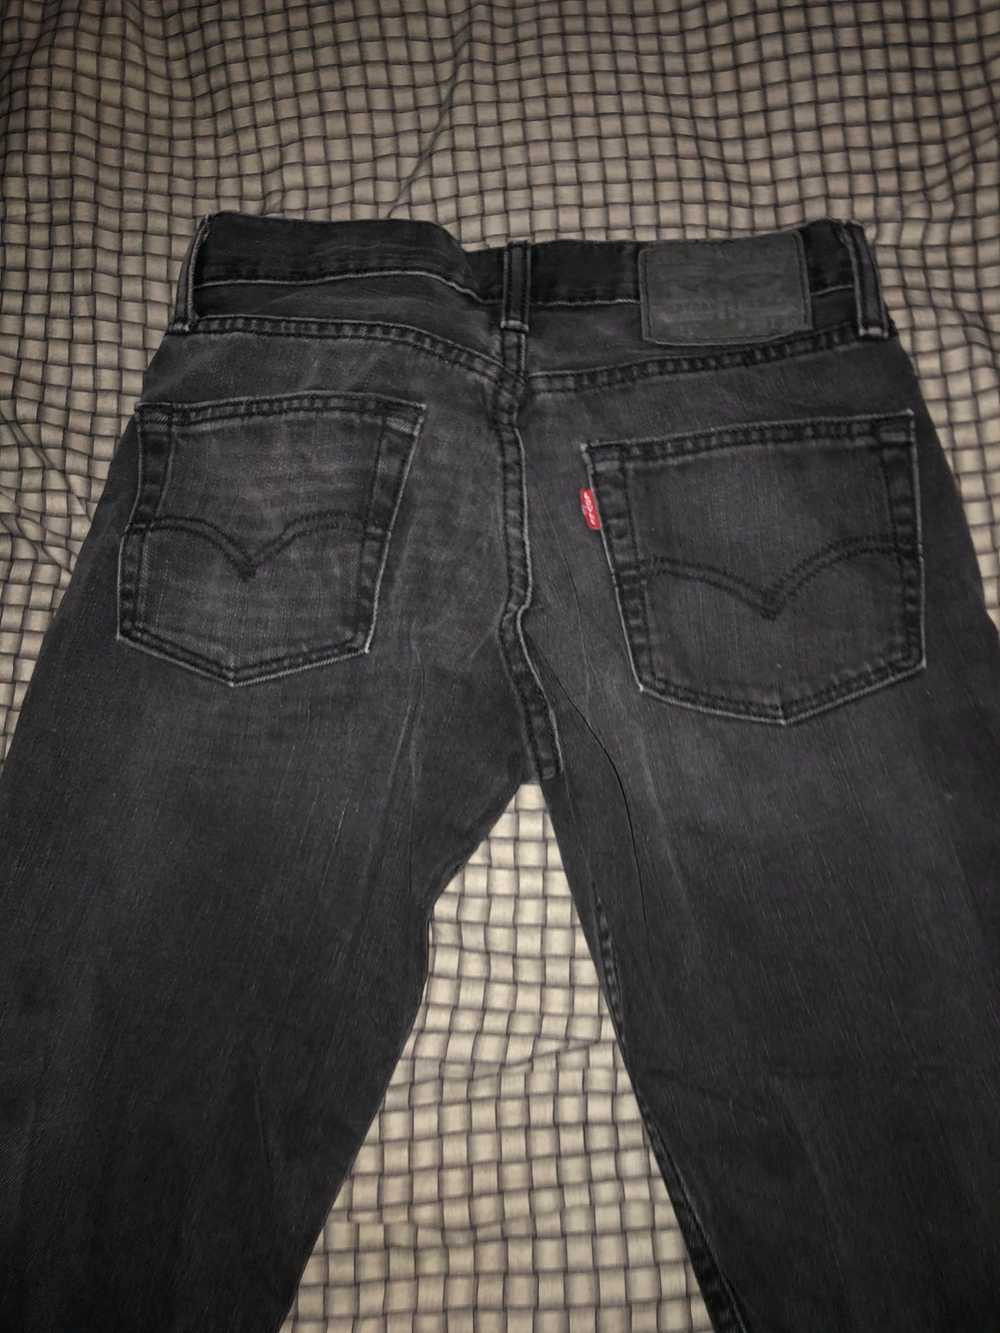 Levi's Black levi jeans - image 4